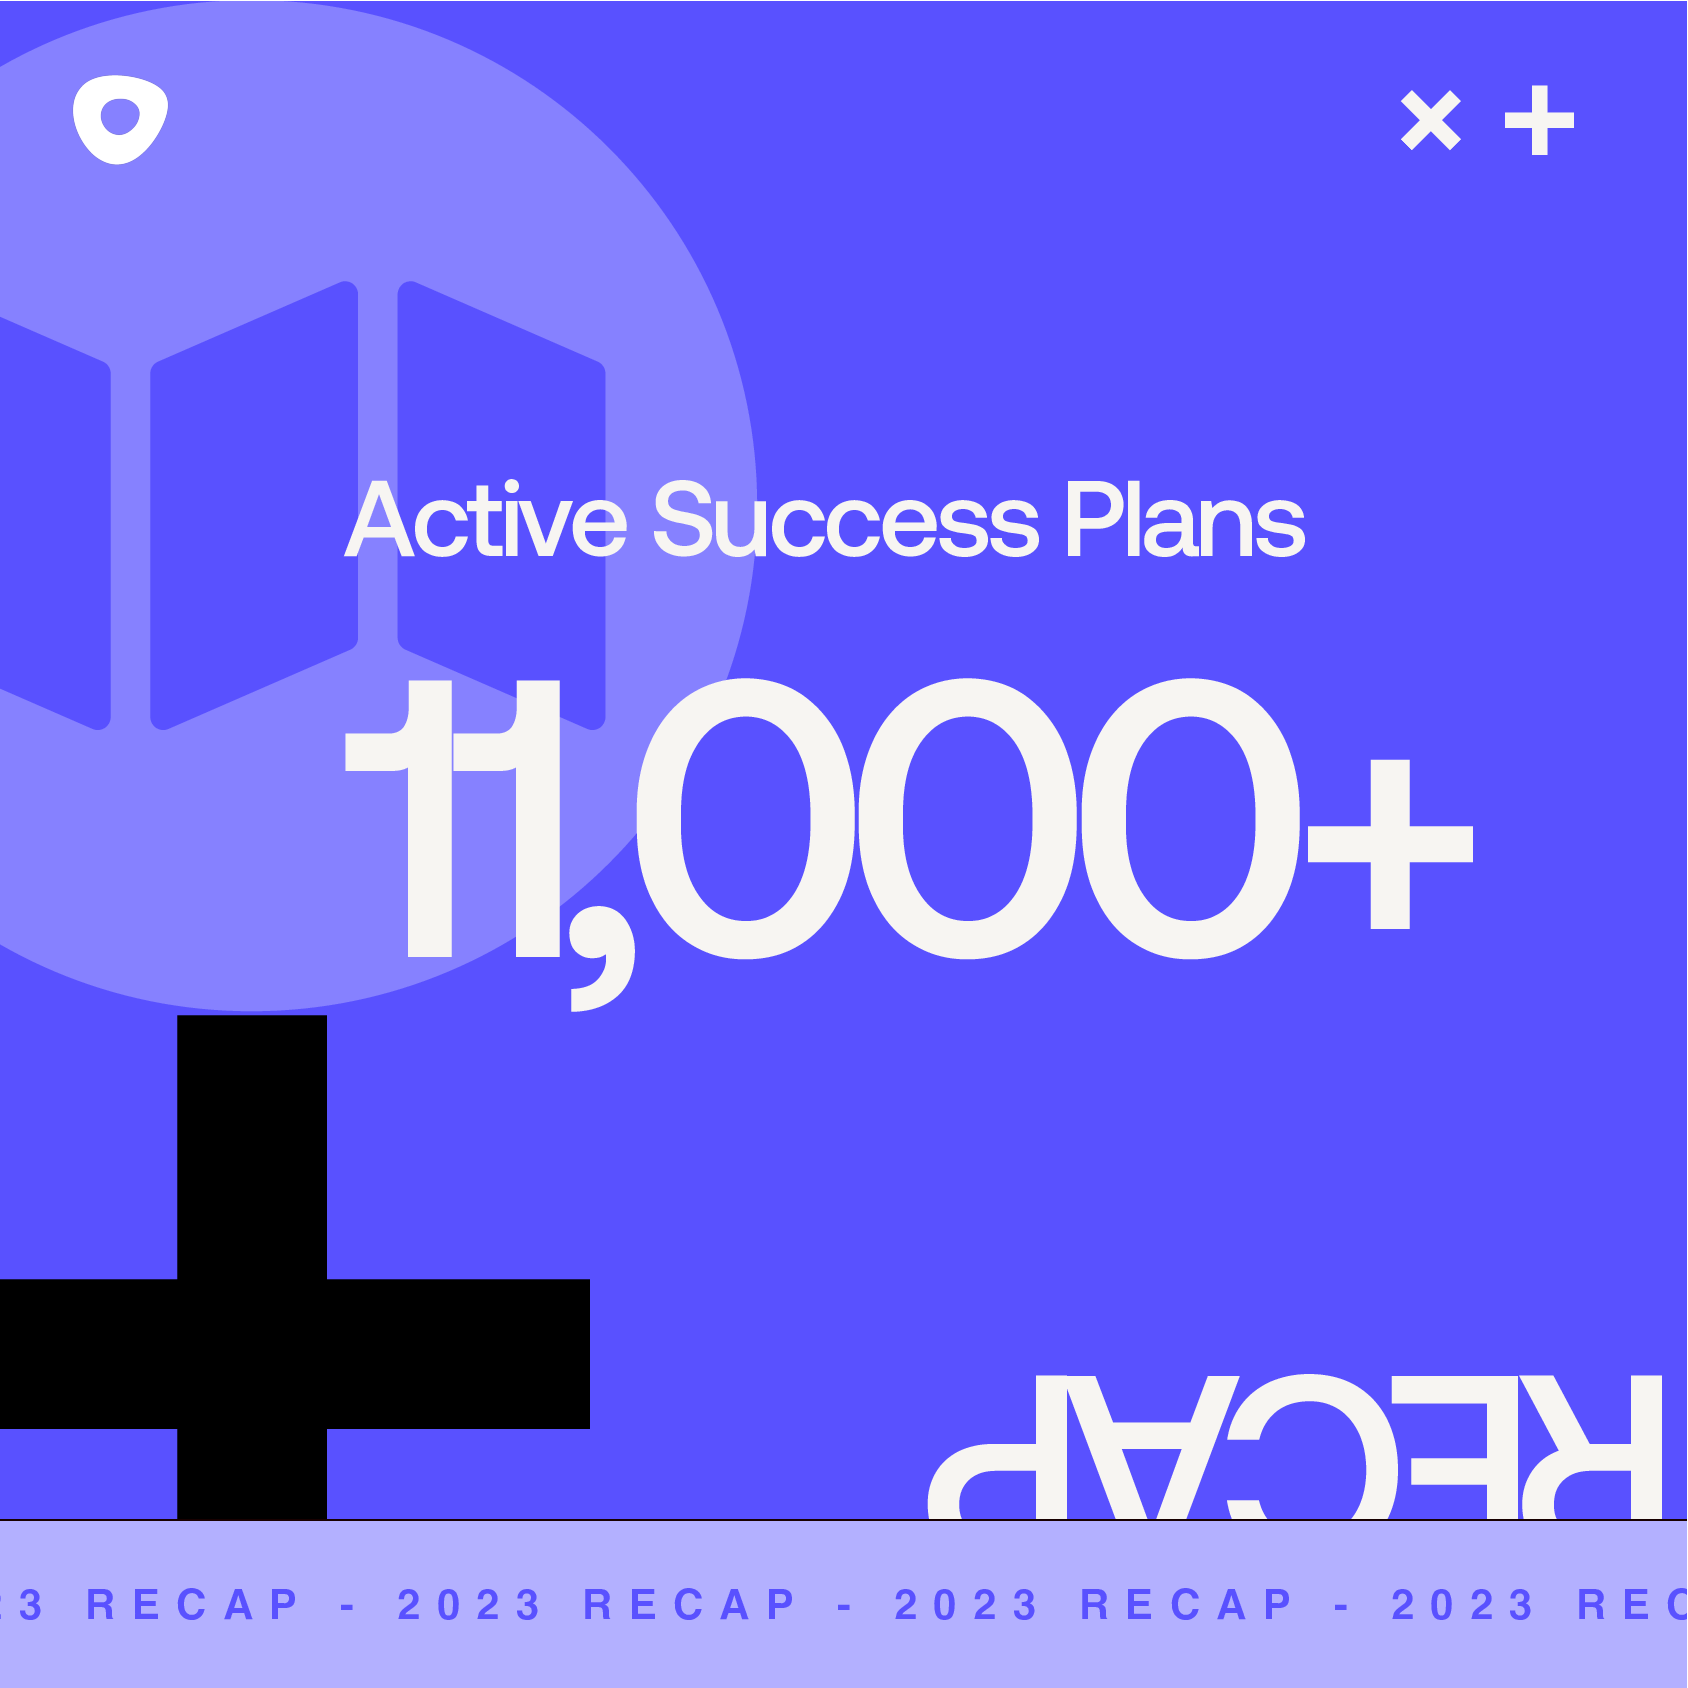 outreach recap 2023 11,000+ active success plans